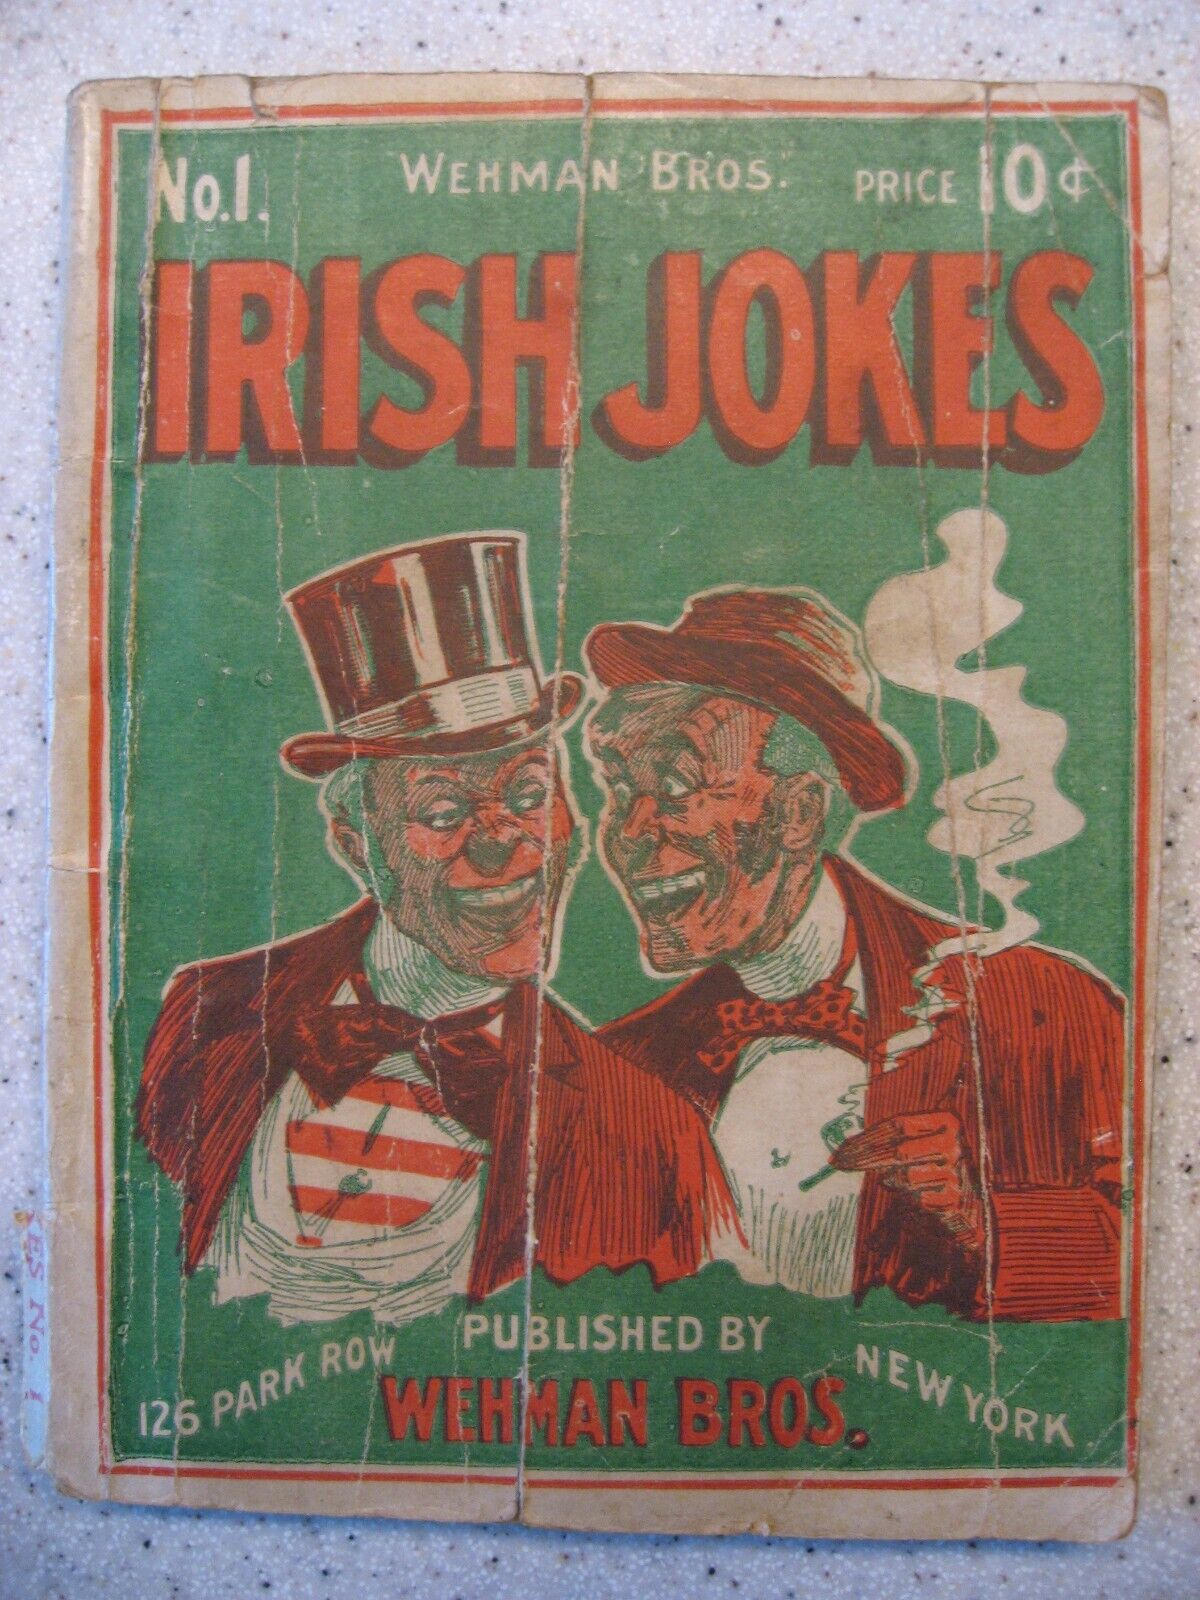 Vintage Wehman Bros. Irish Jokes Handy Series No. 1  - 10 Cents Pocket Book 1906